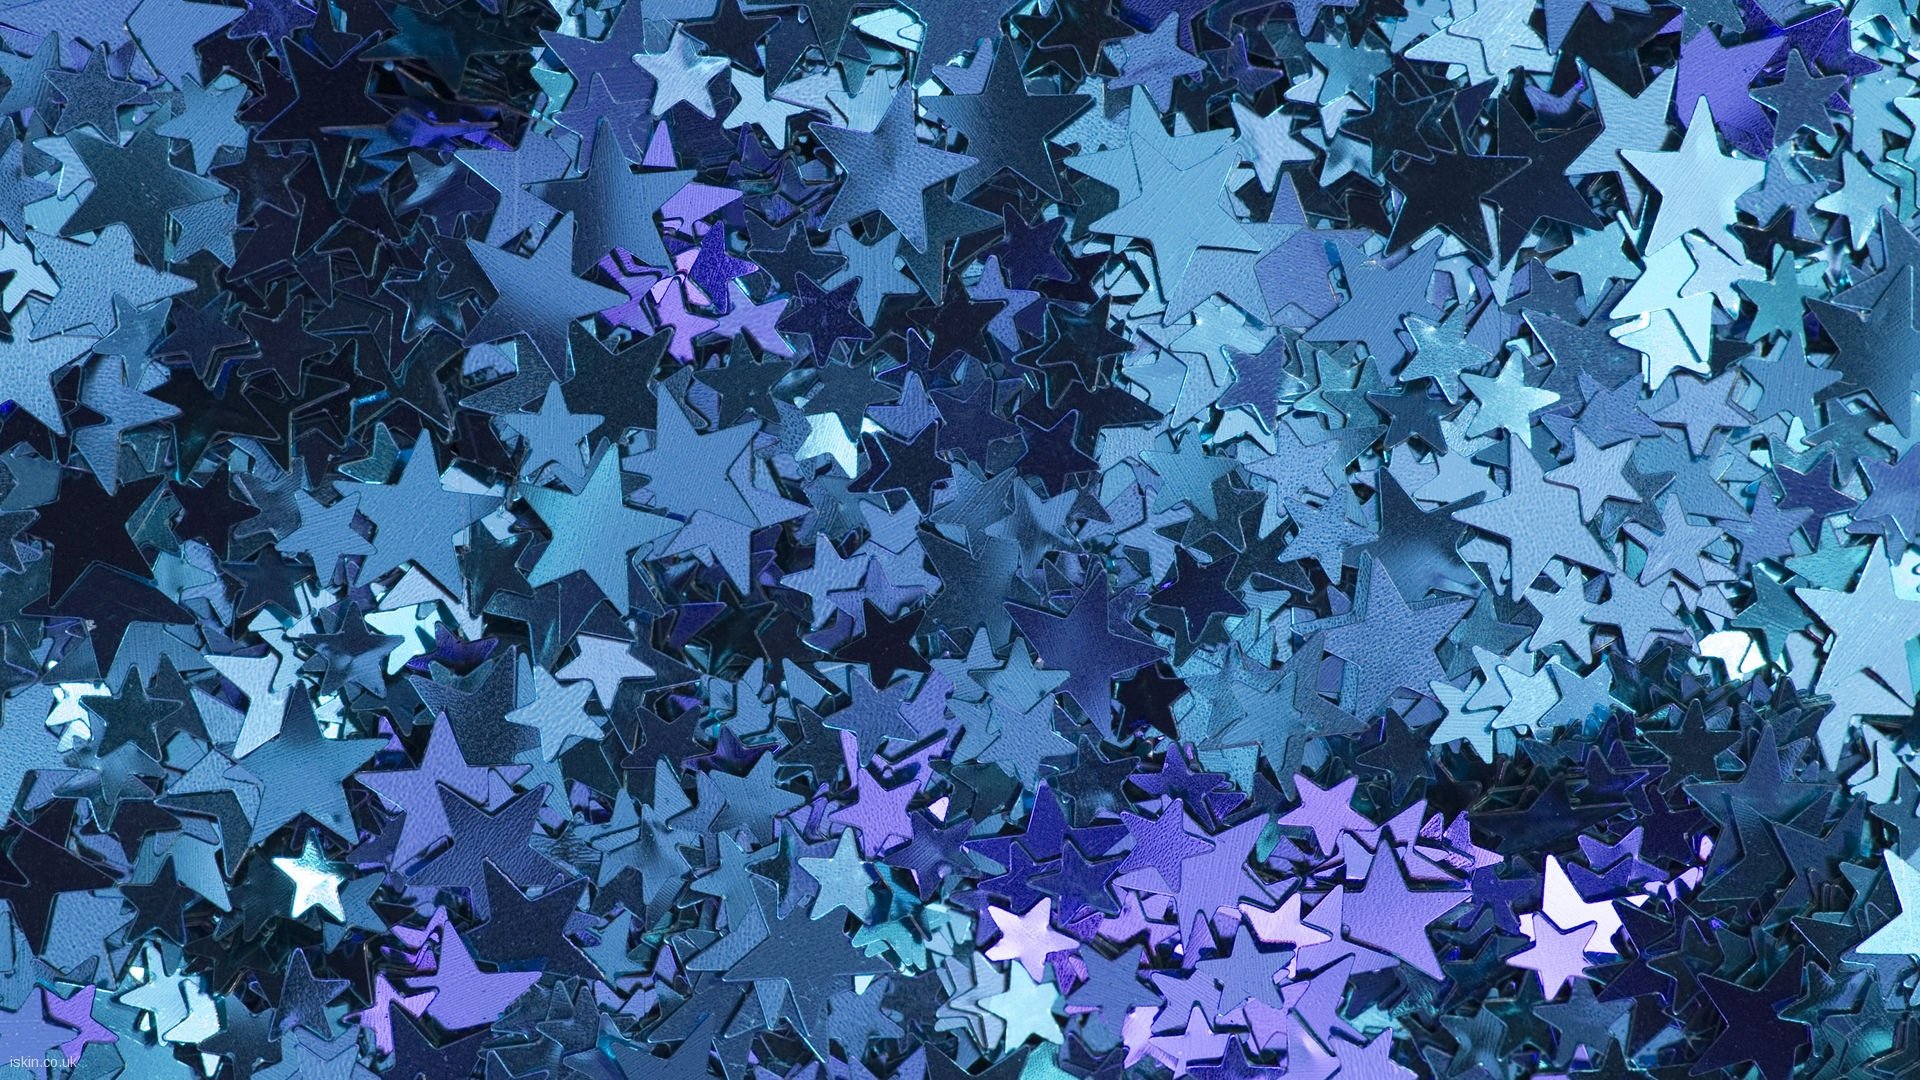 Blue Stars Aesthetic Wallpapers